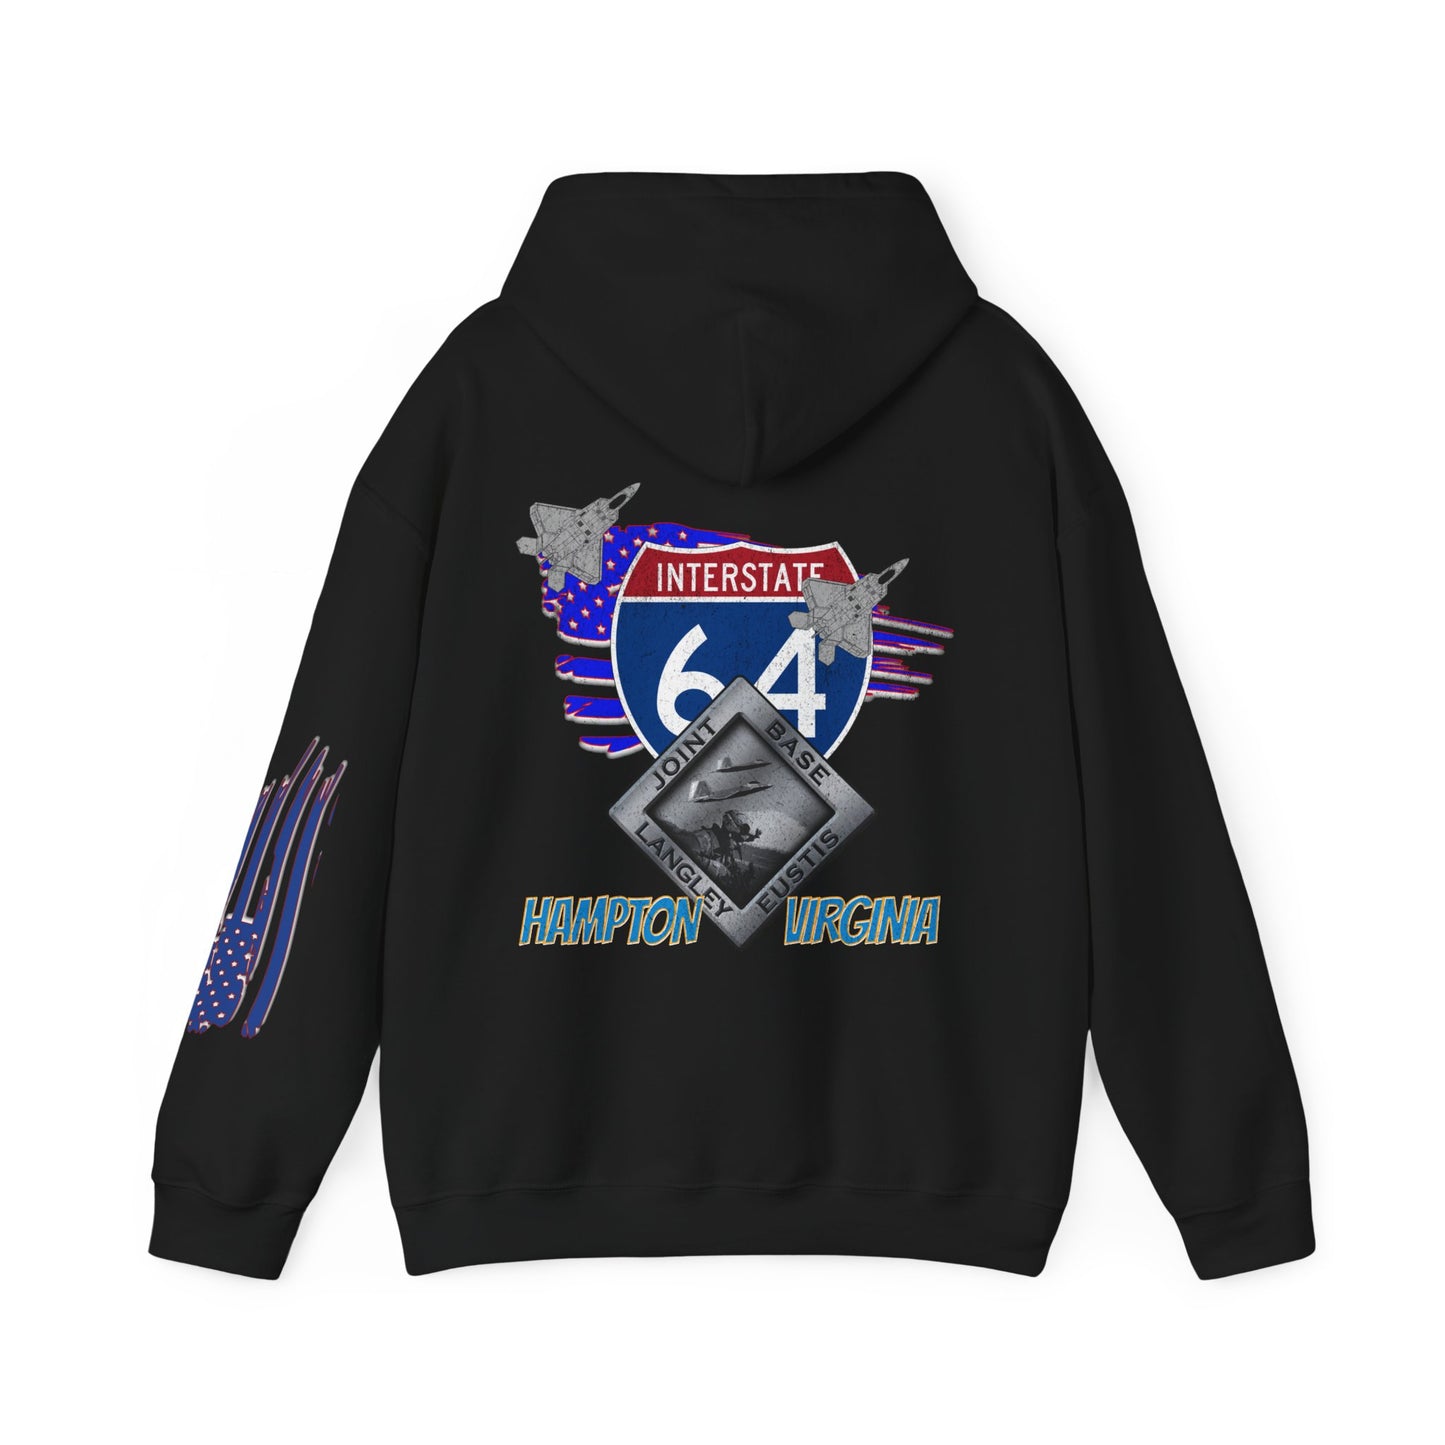 I-64, LANGLEY AFB, HAMPTON, VA,  Unisex Heavy Blend™ Hooded Sweatshirt